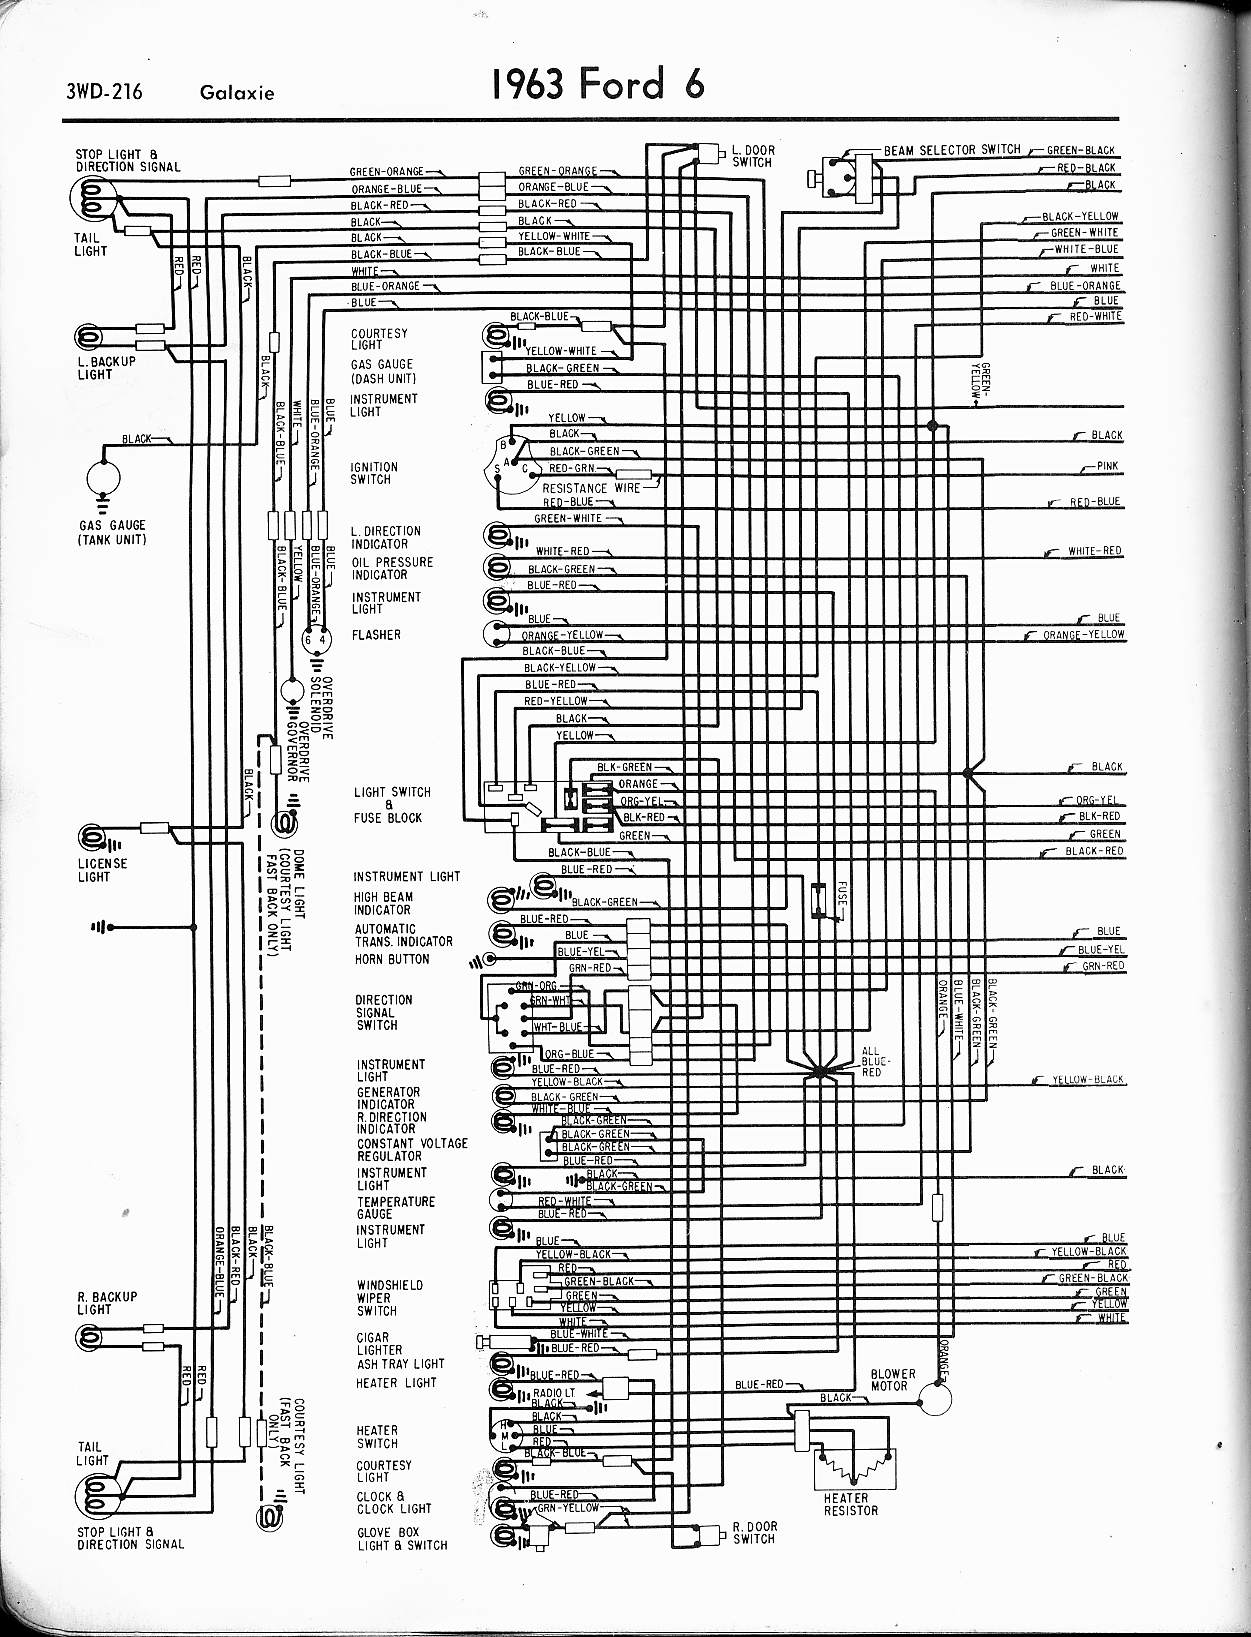 1965 Ford galaxie wiring diagram #8